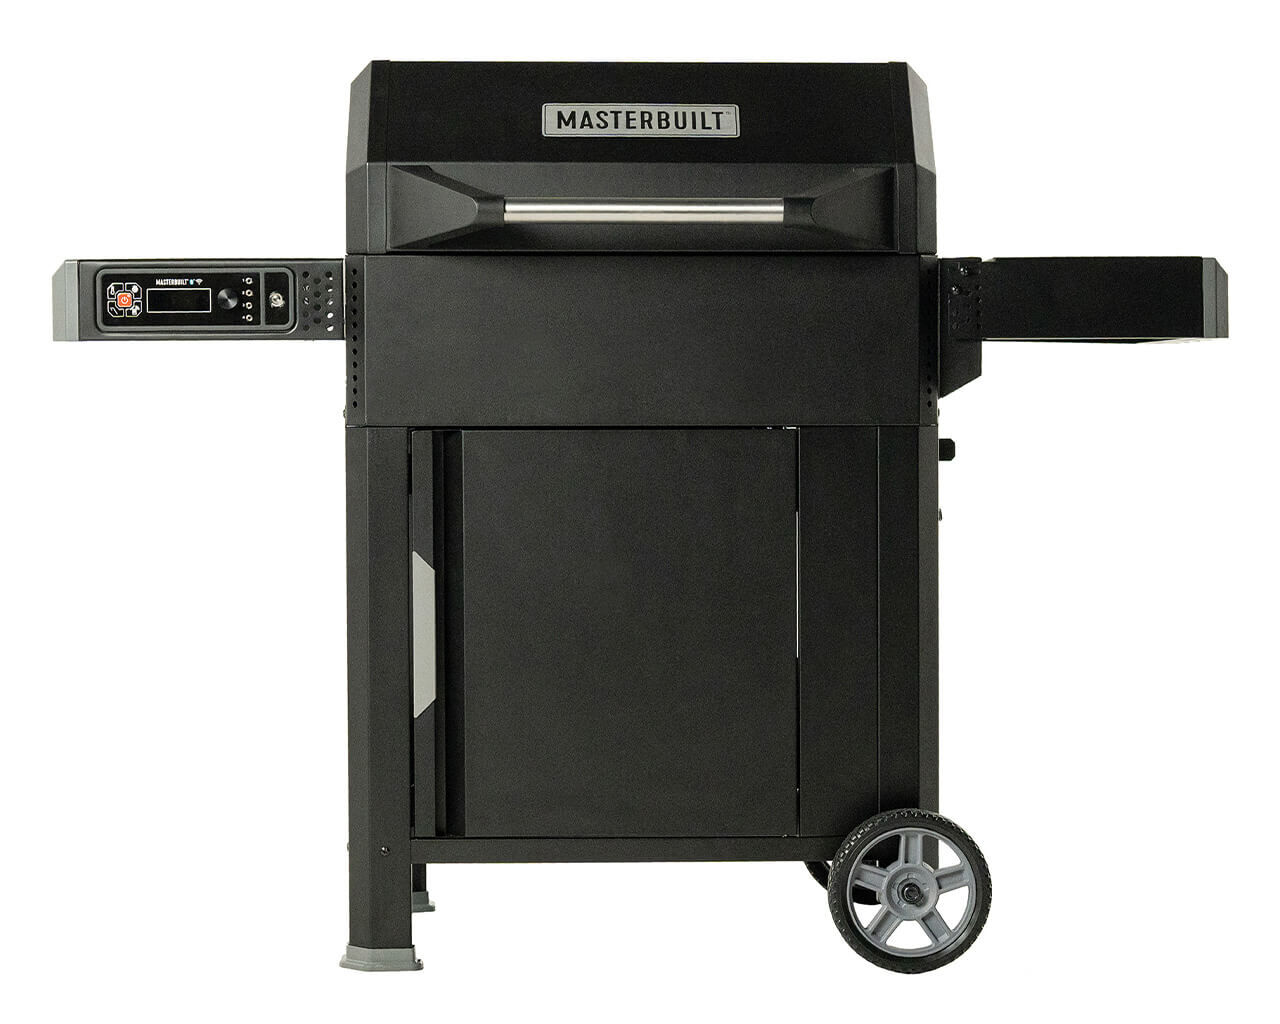 Masterbuilt AutoIgnite™ Series 545 Digital Charcoal Grill and Smoker